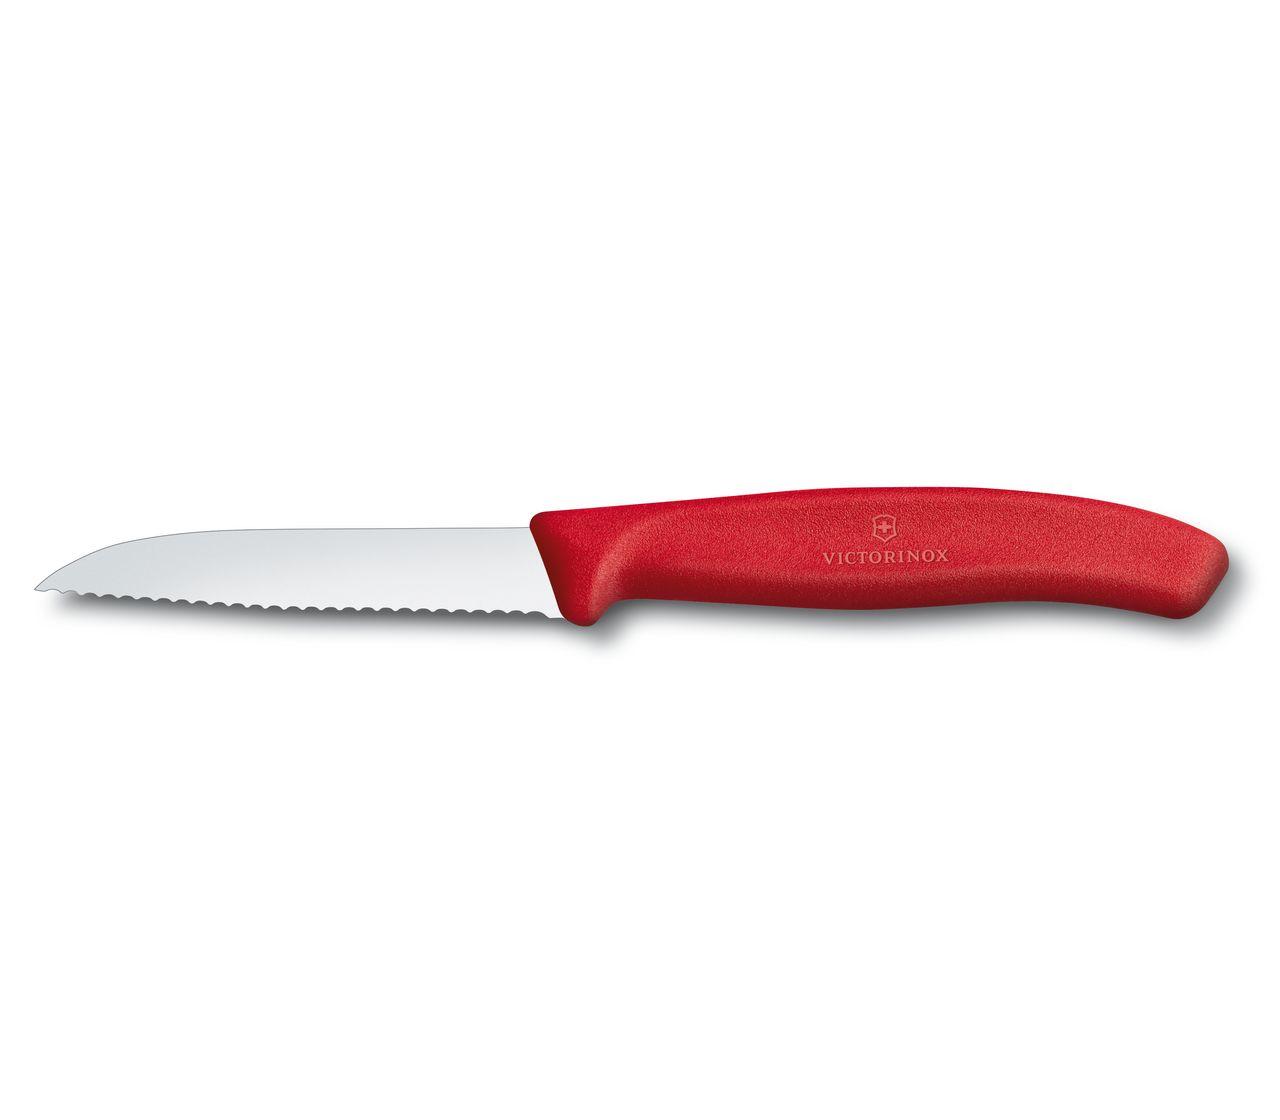 Victorinox Harvest Knife with sheath